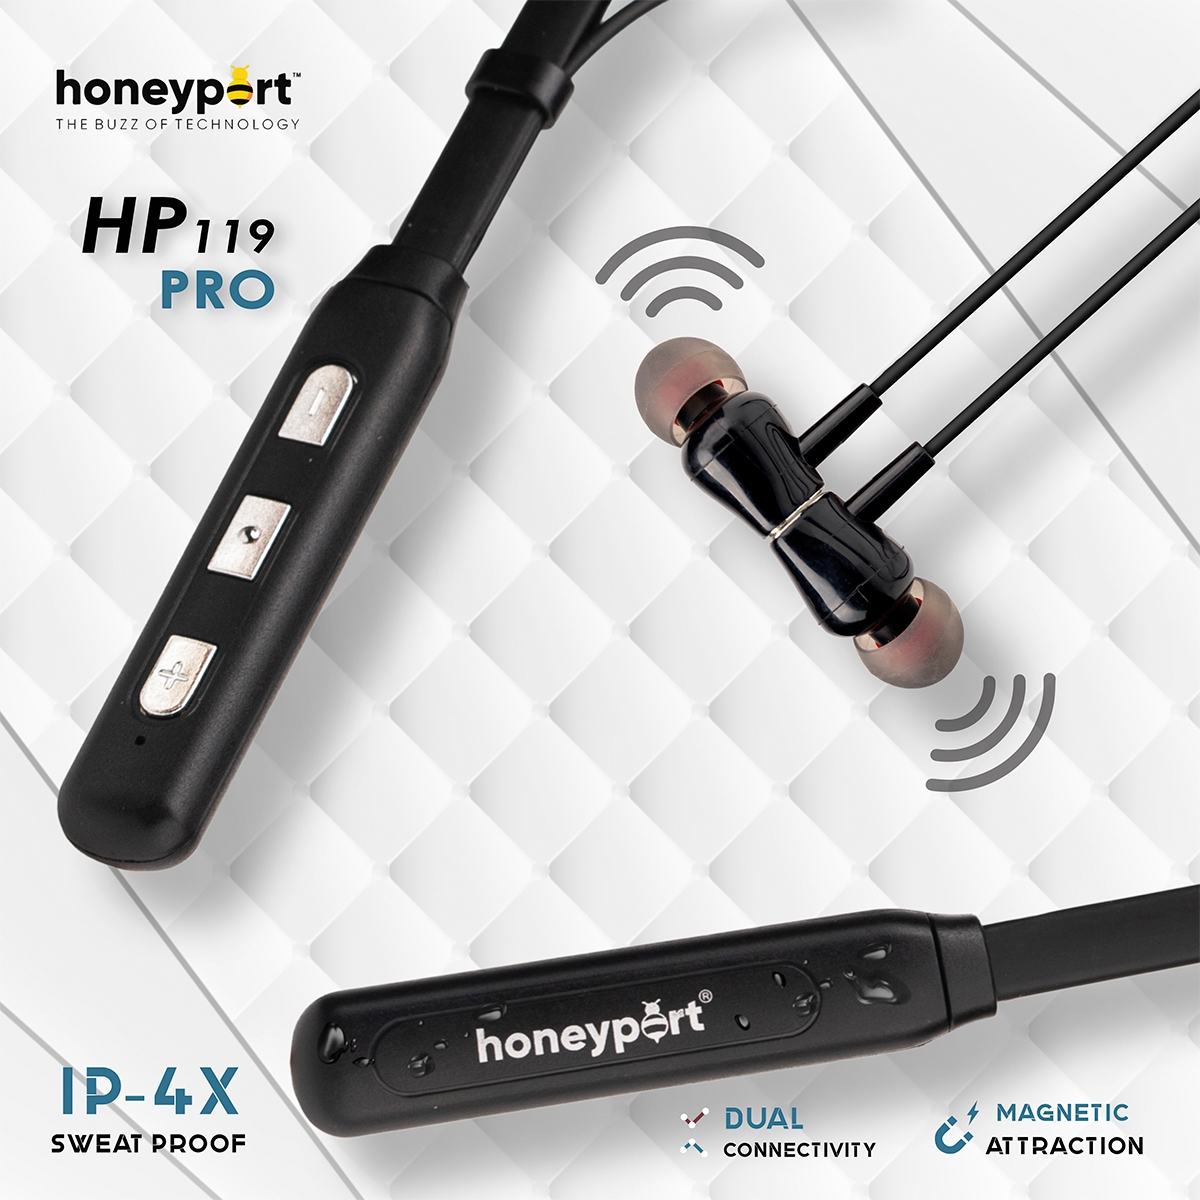 Honeyport- THE BUZZ OF TECHNOLOGY | HP 119 Pro